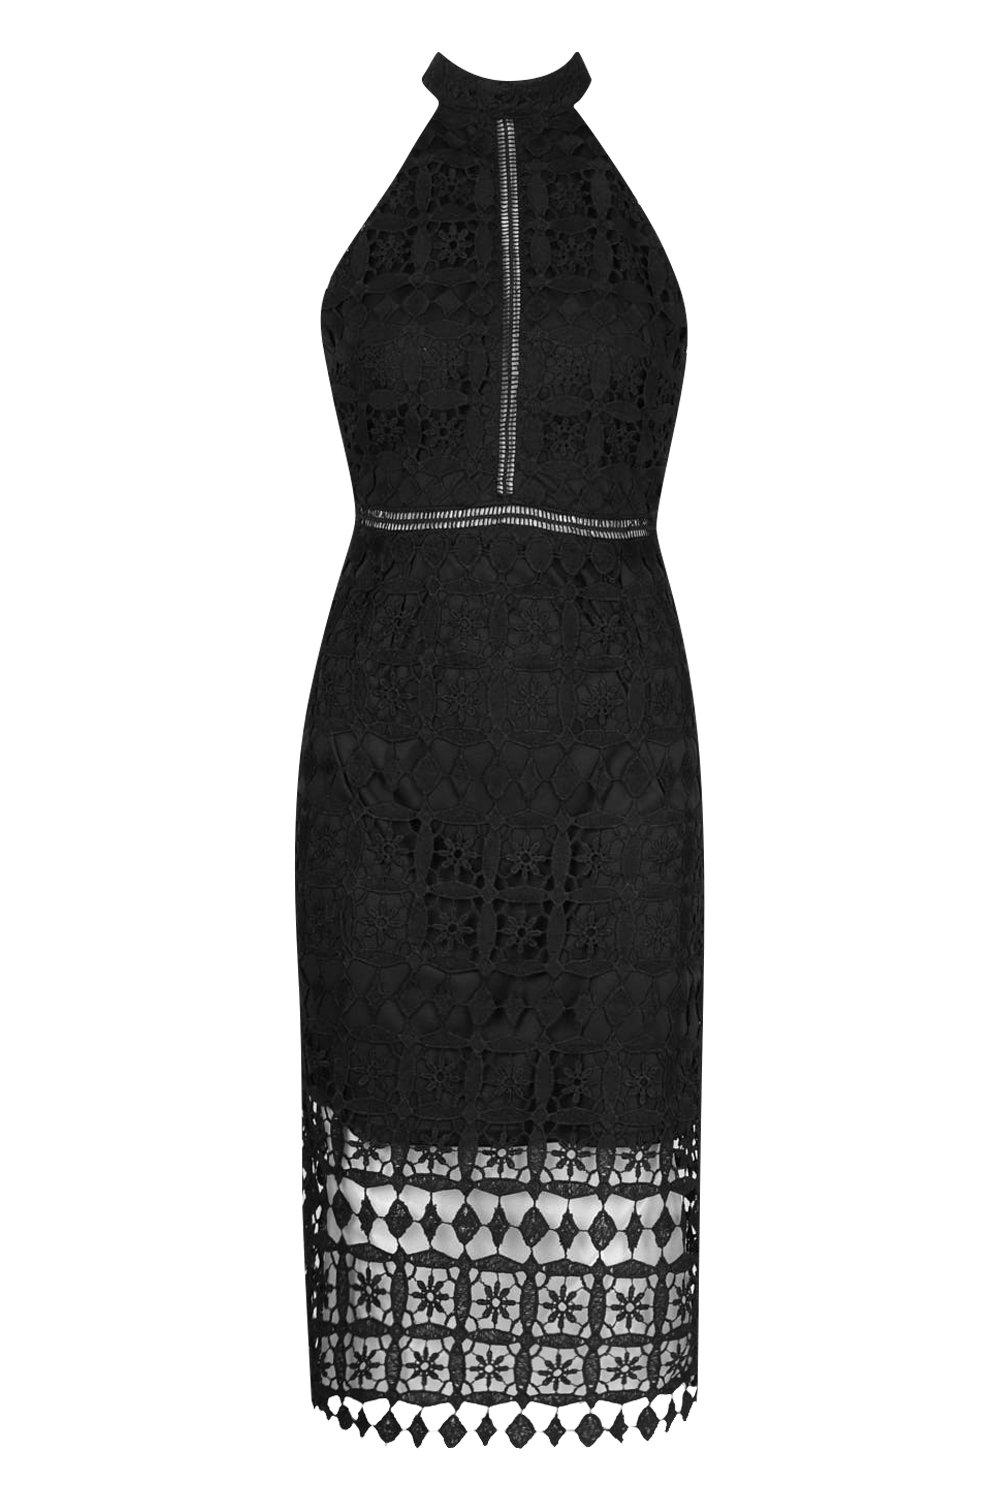 boohoo black crochet dress